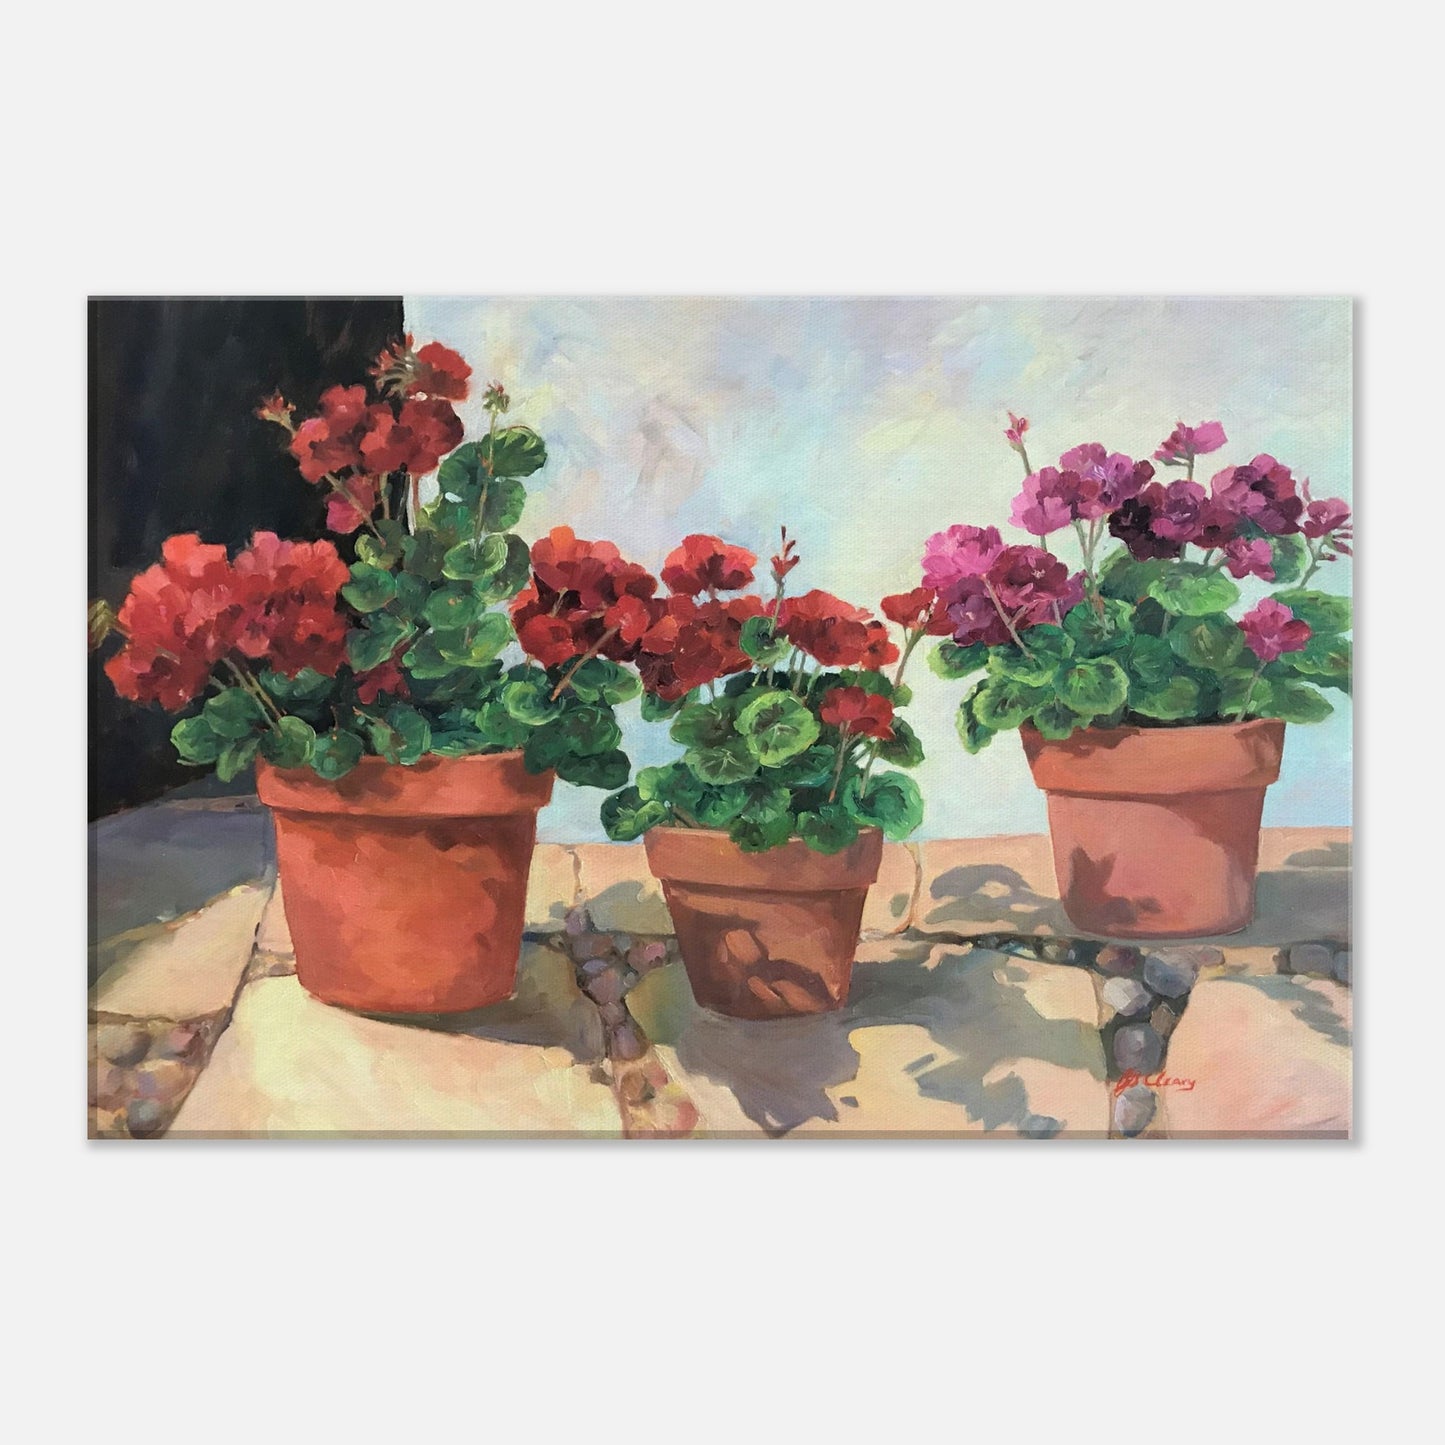 Geraniums Series 1 Floral Print 12x18 inch on Canvas